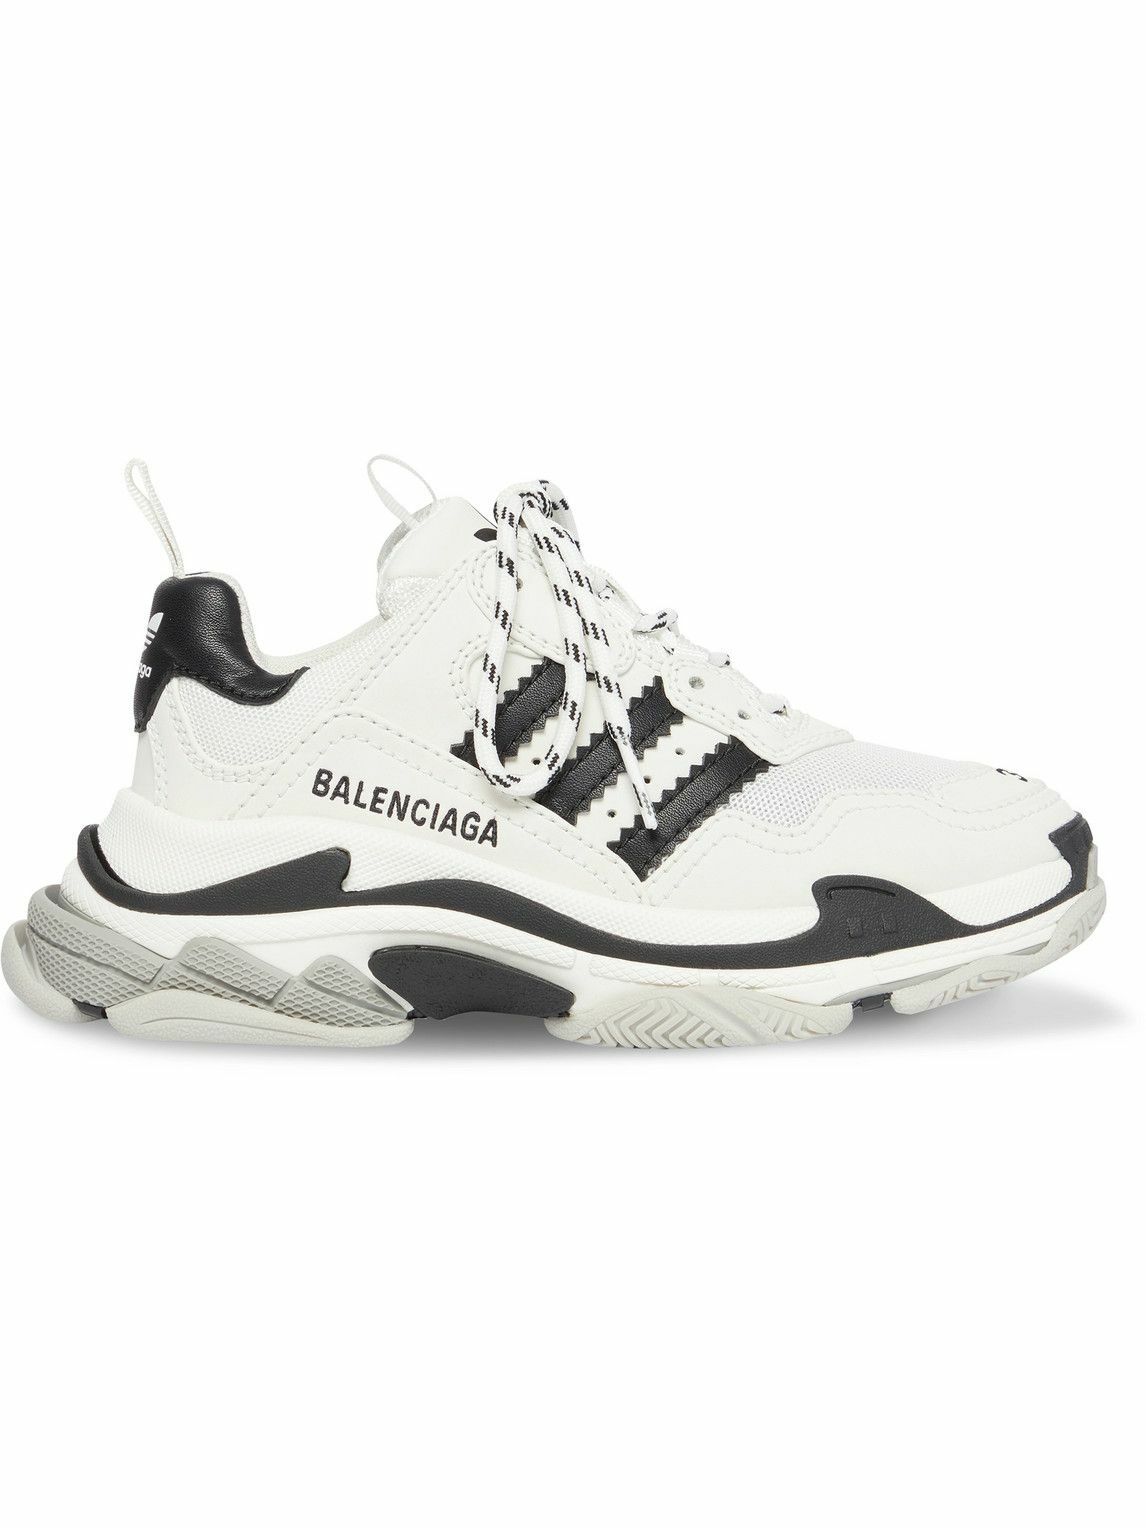 Balenciaga - adidas Triple S Leather and Mesh Sneakers - White Balenciaga